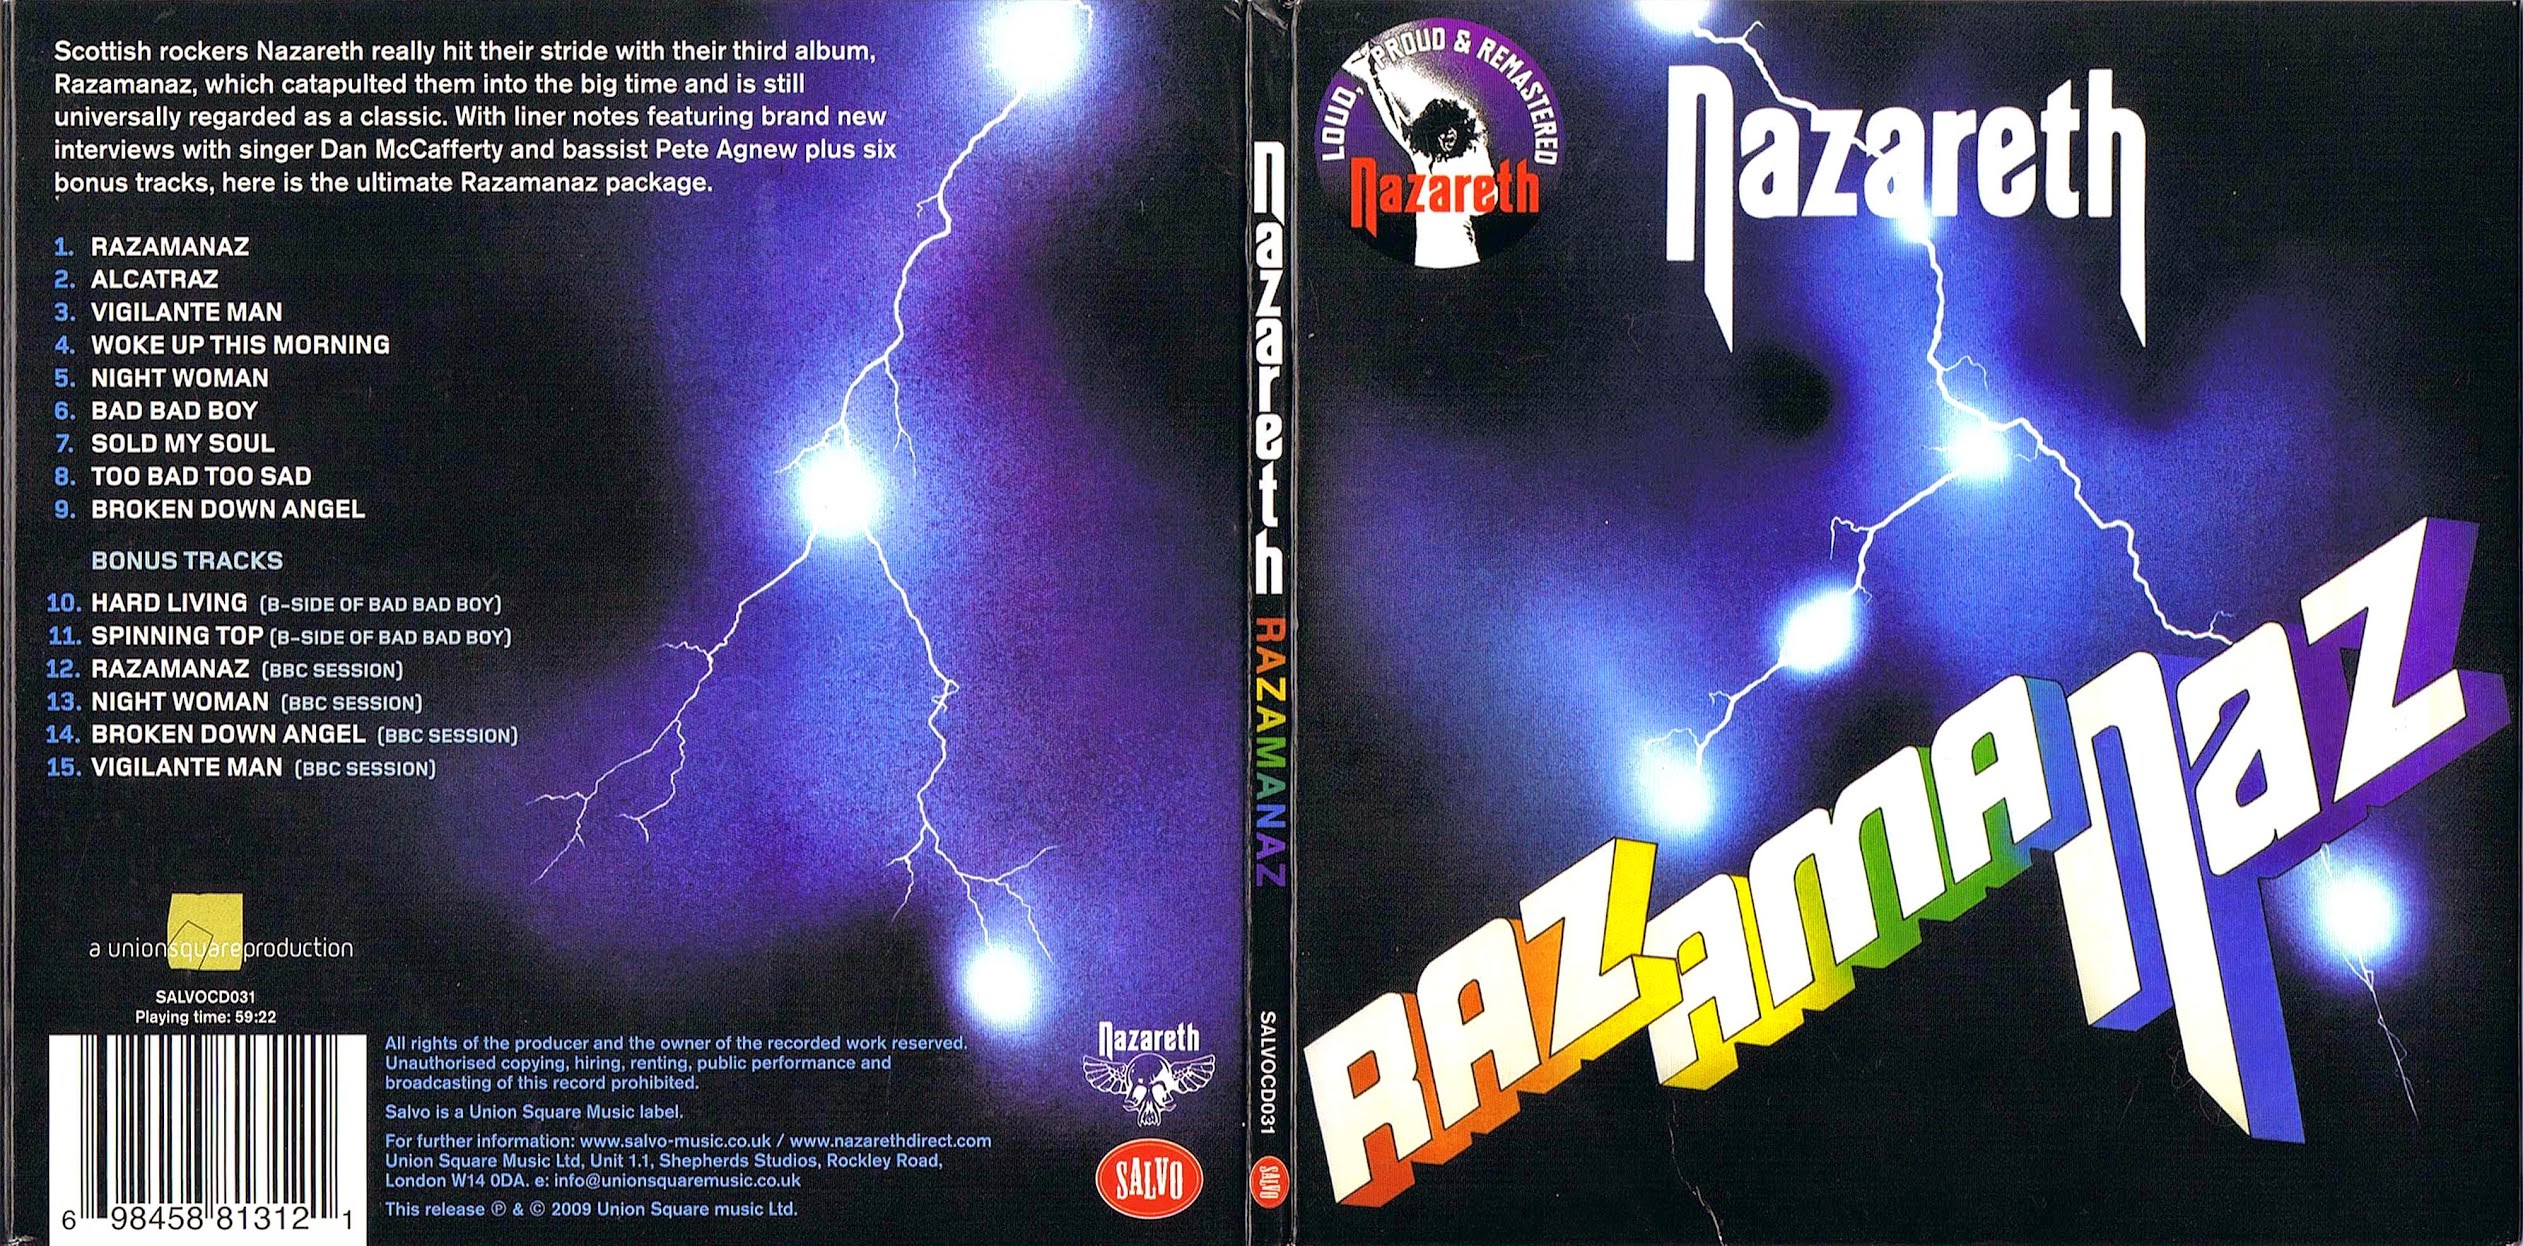 Nazareth nazareth треки. Nazareth обложки альбомов Razamanaz. Nazareth Razamanaz 1973. Nazareth Razamanaz 1973 обложка. Nazareth 1971 Nazareth обложка альбома.